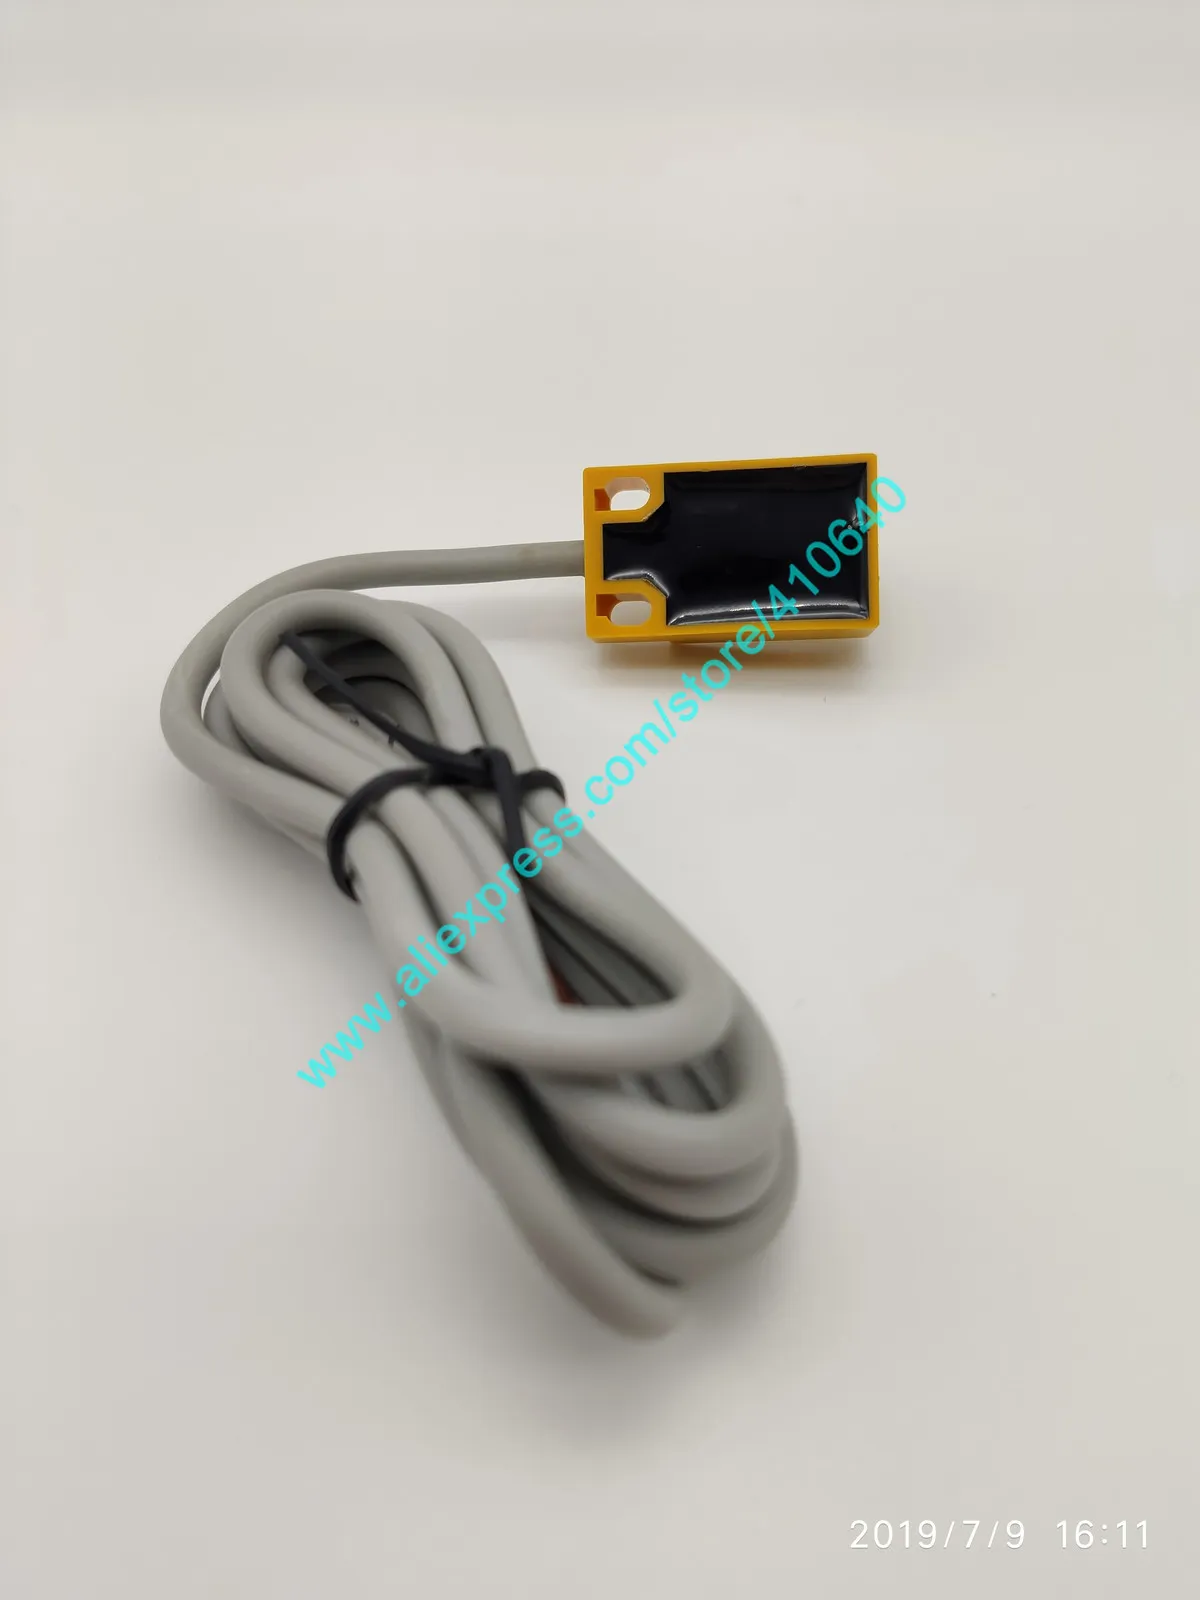 Mini Storlek Omch Square Proximity Switch GKB-M0524NA 3 Wire NPN Öppna normalt 10 till 30V sensor för metallmaterial 1100 mm kabel